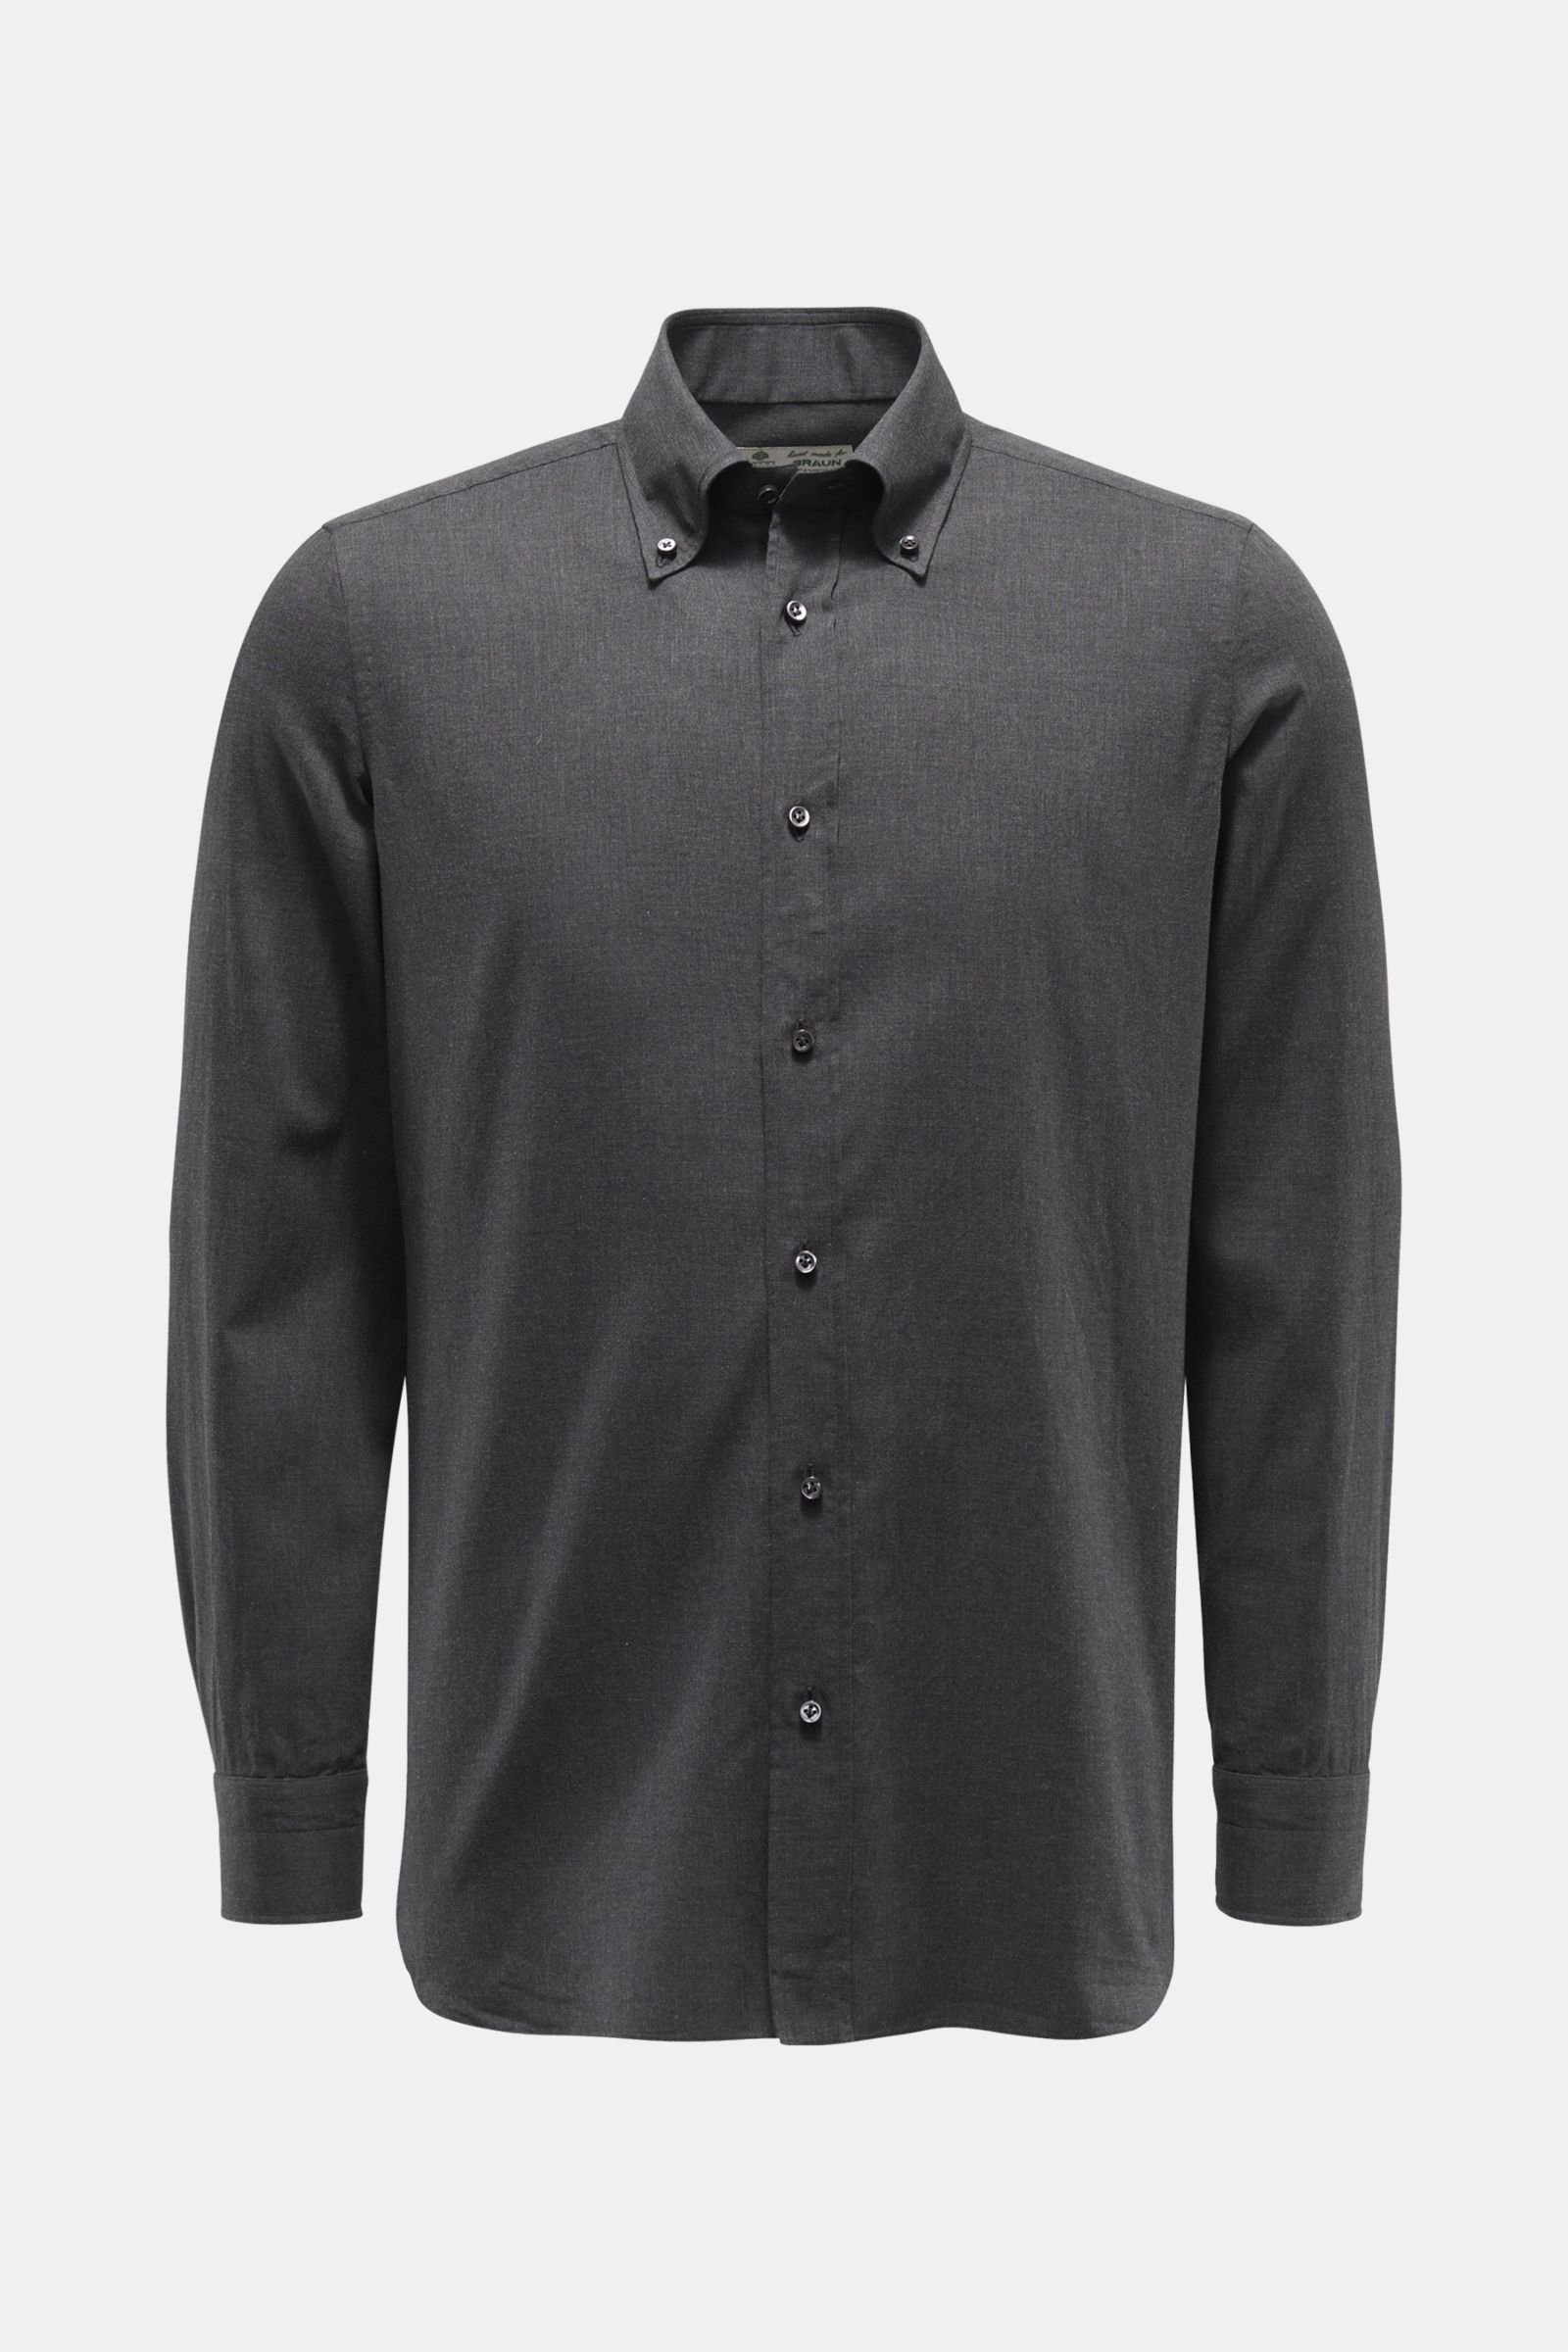 BORRELLI casual shirt 'Gable' button-down collar anthracite | BRAUN Hamburg